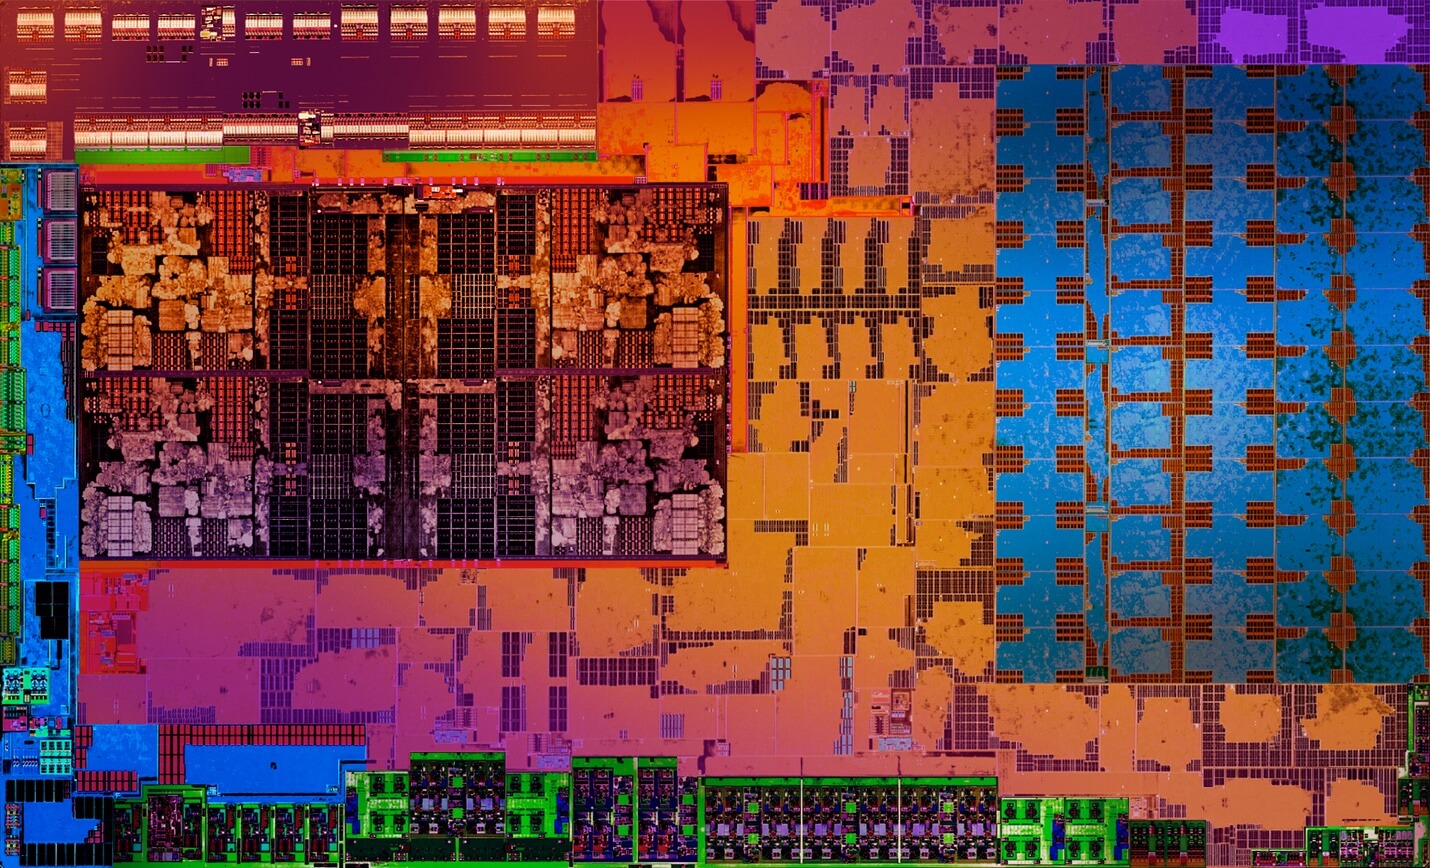 AMD launches Ryzen Mobile APUs with Vega graphics